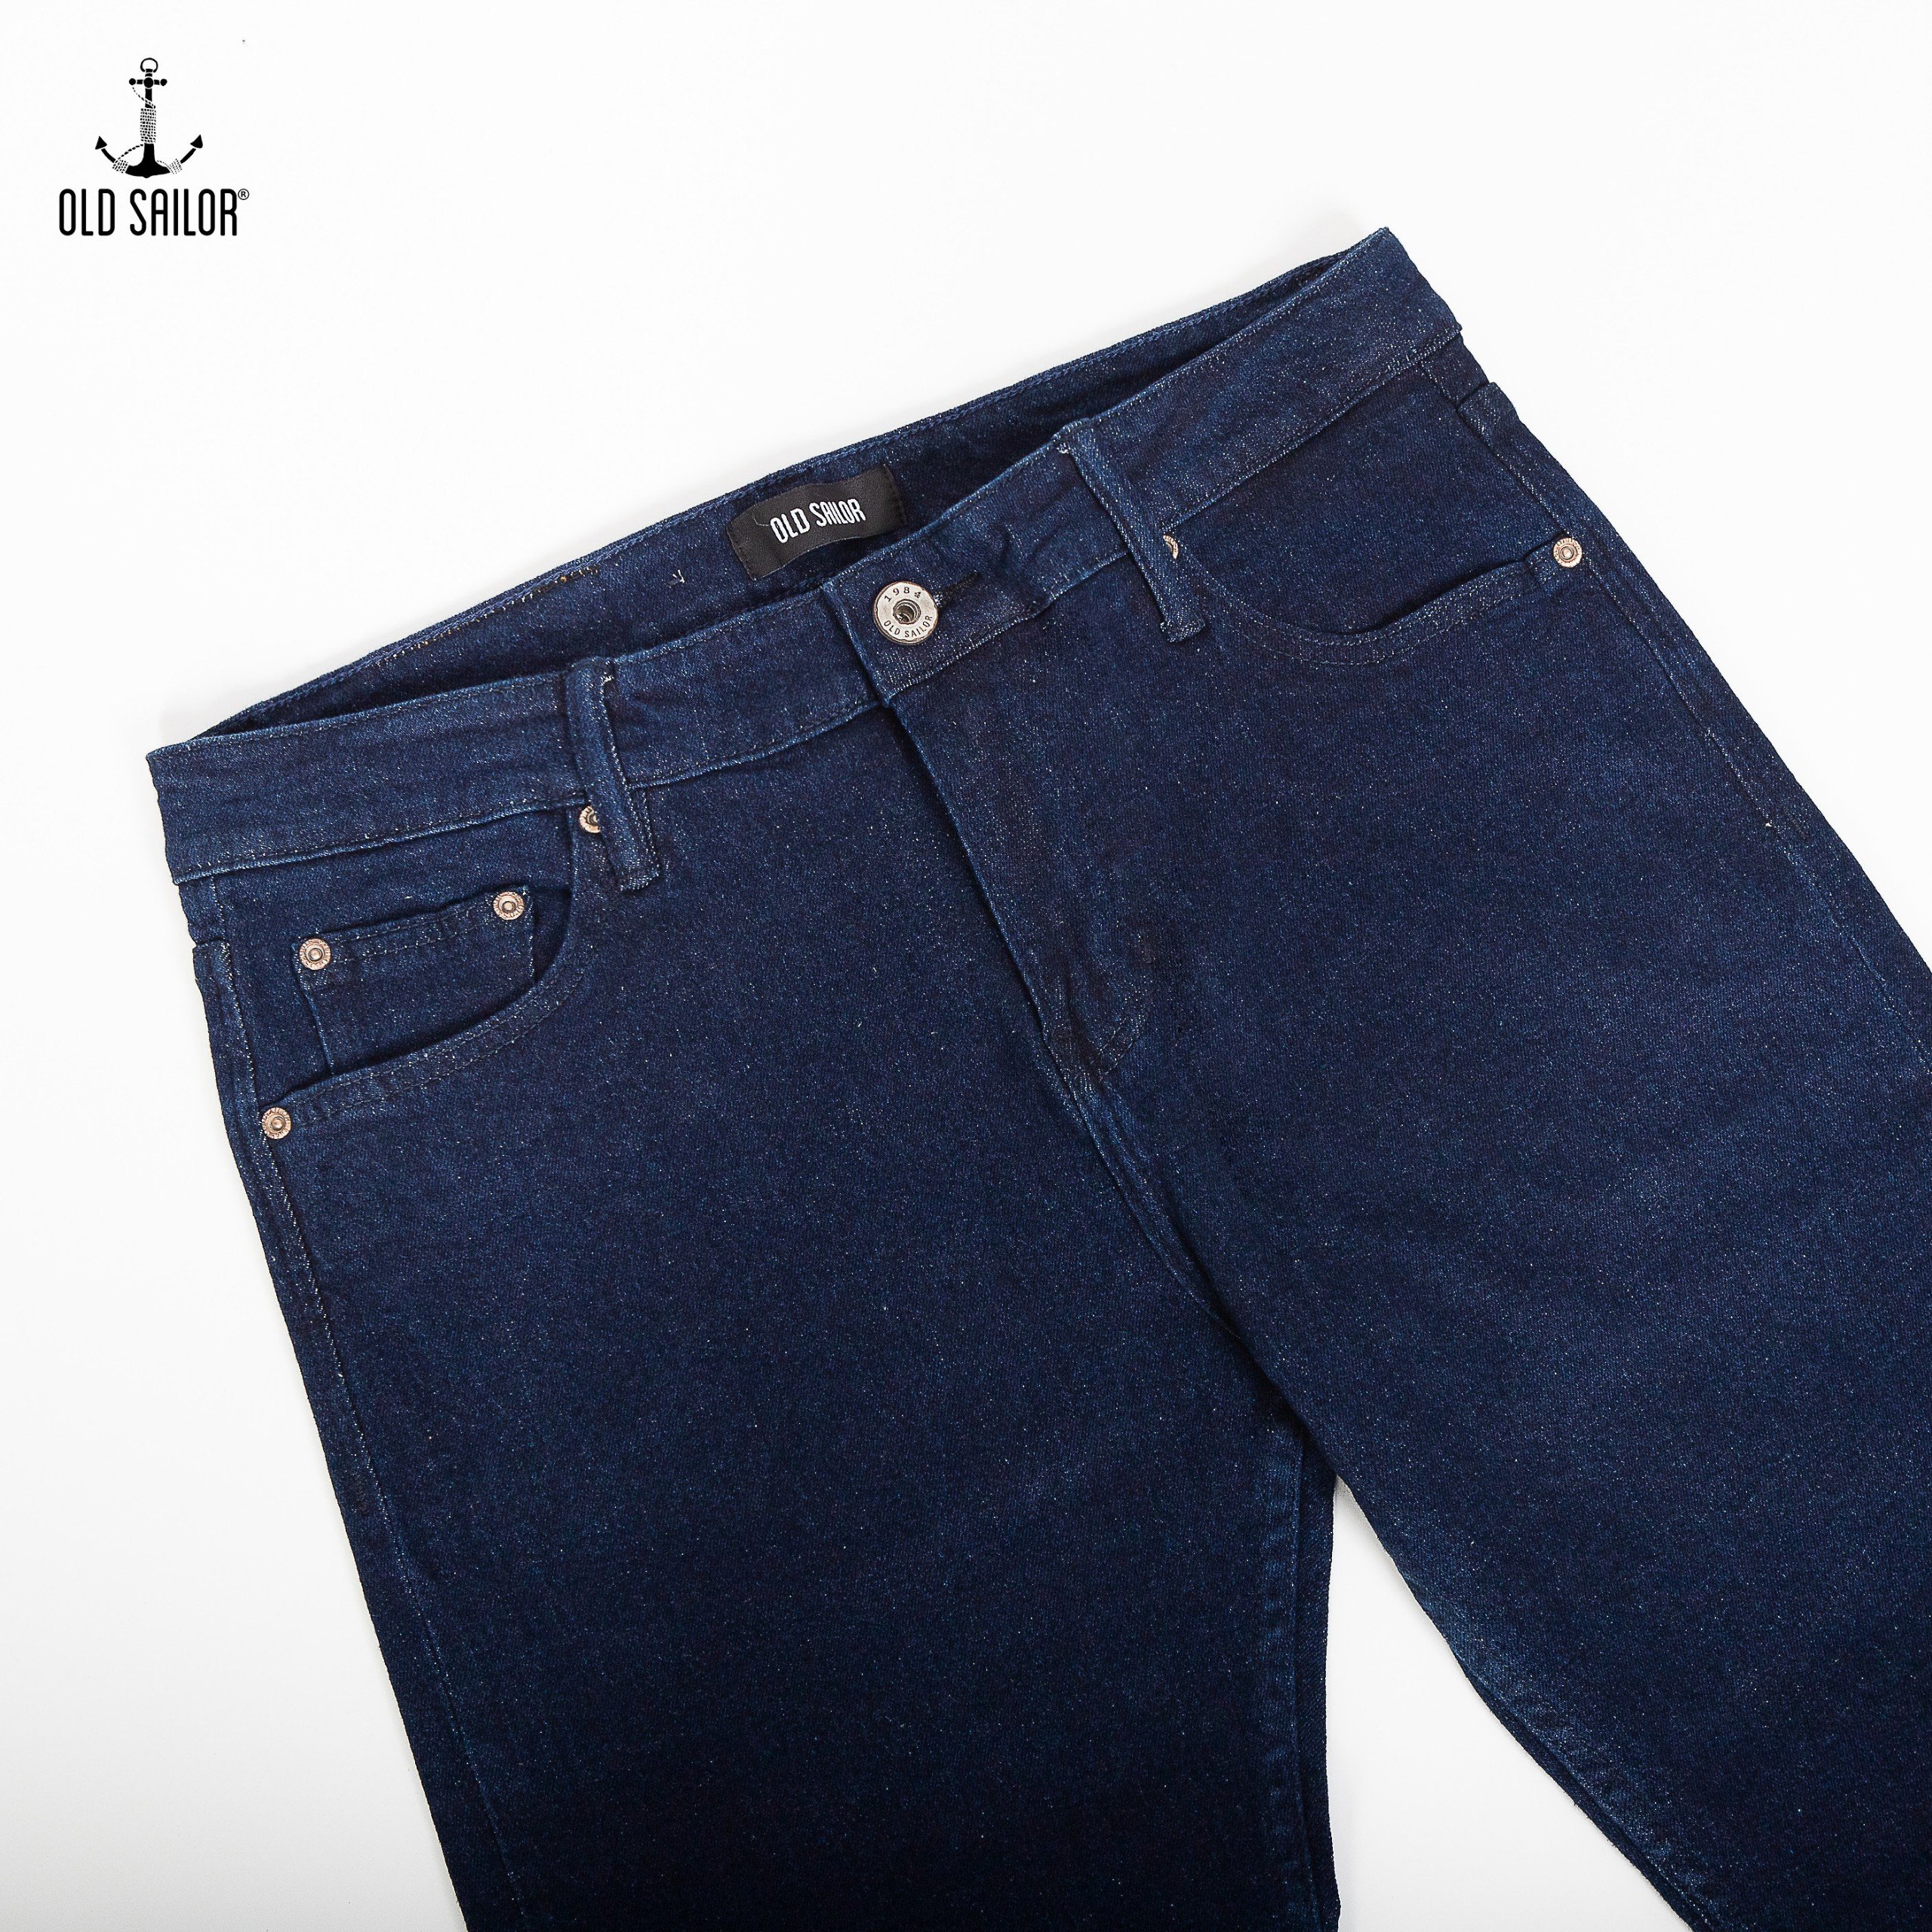 Quần jeans nam form slimfit premium Old Sailor - 6822 - Big size upto 42